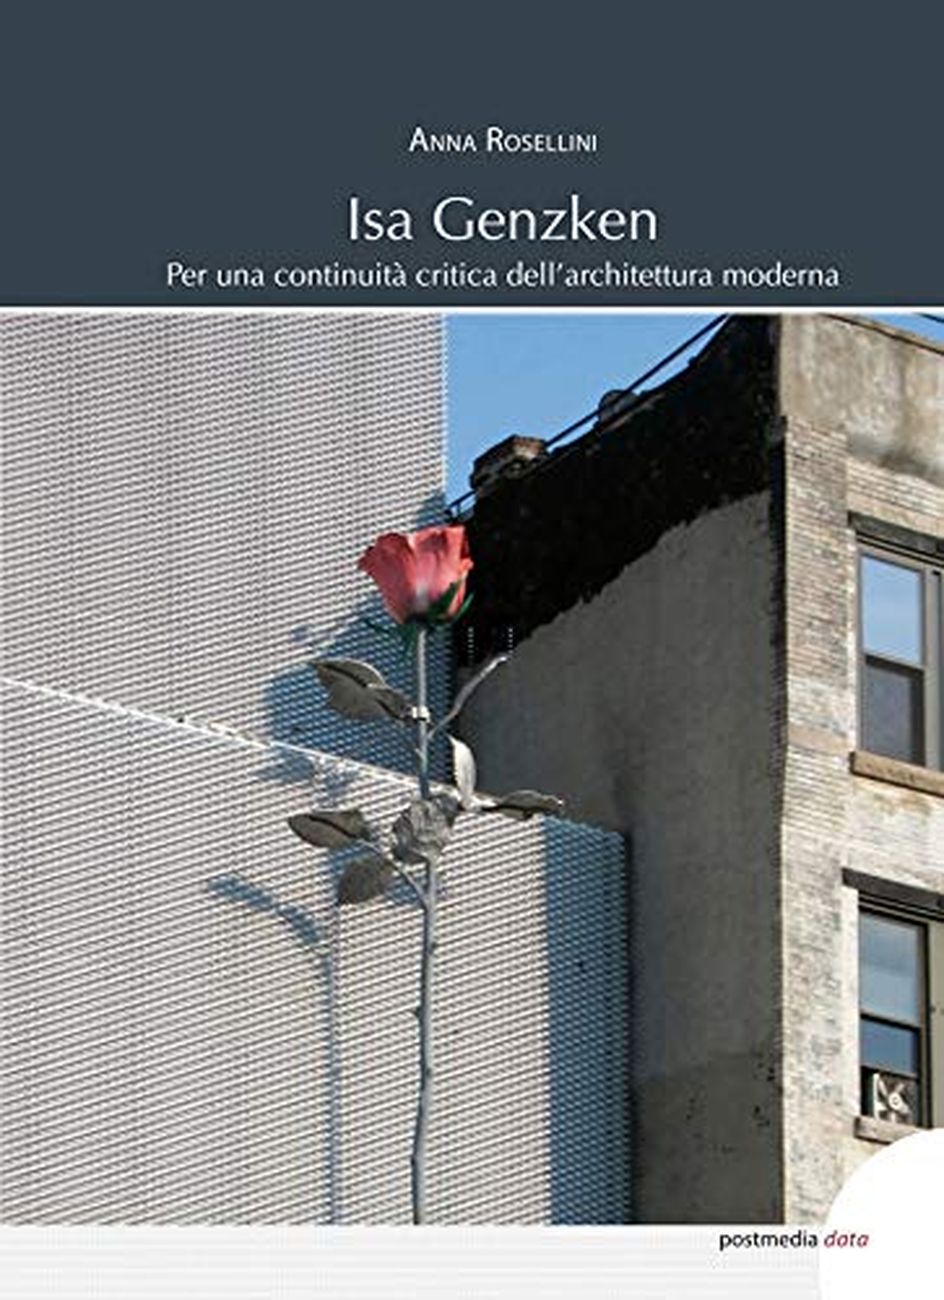 Anna Rosellini – Isa Genzken (Postmedia Books, Milano 2020)